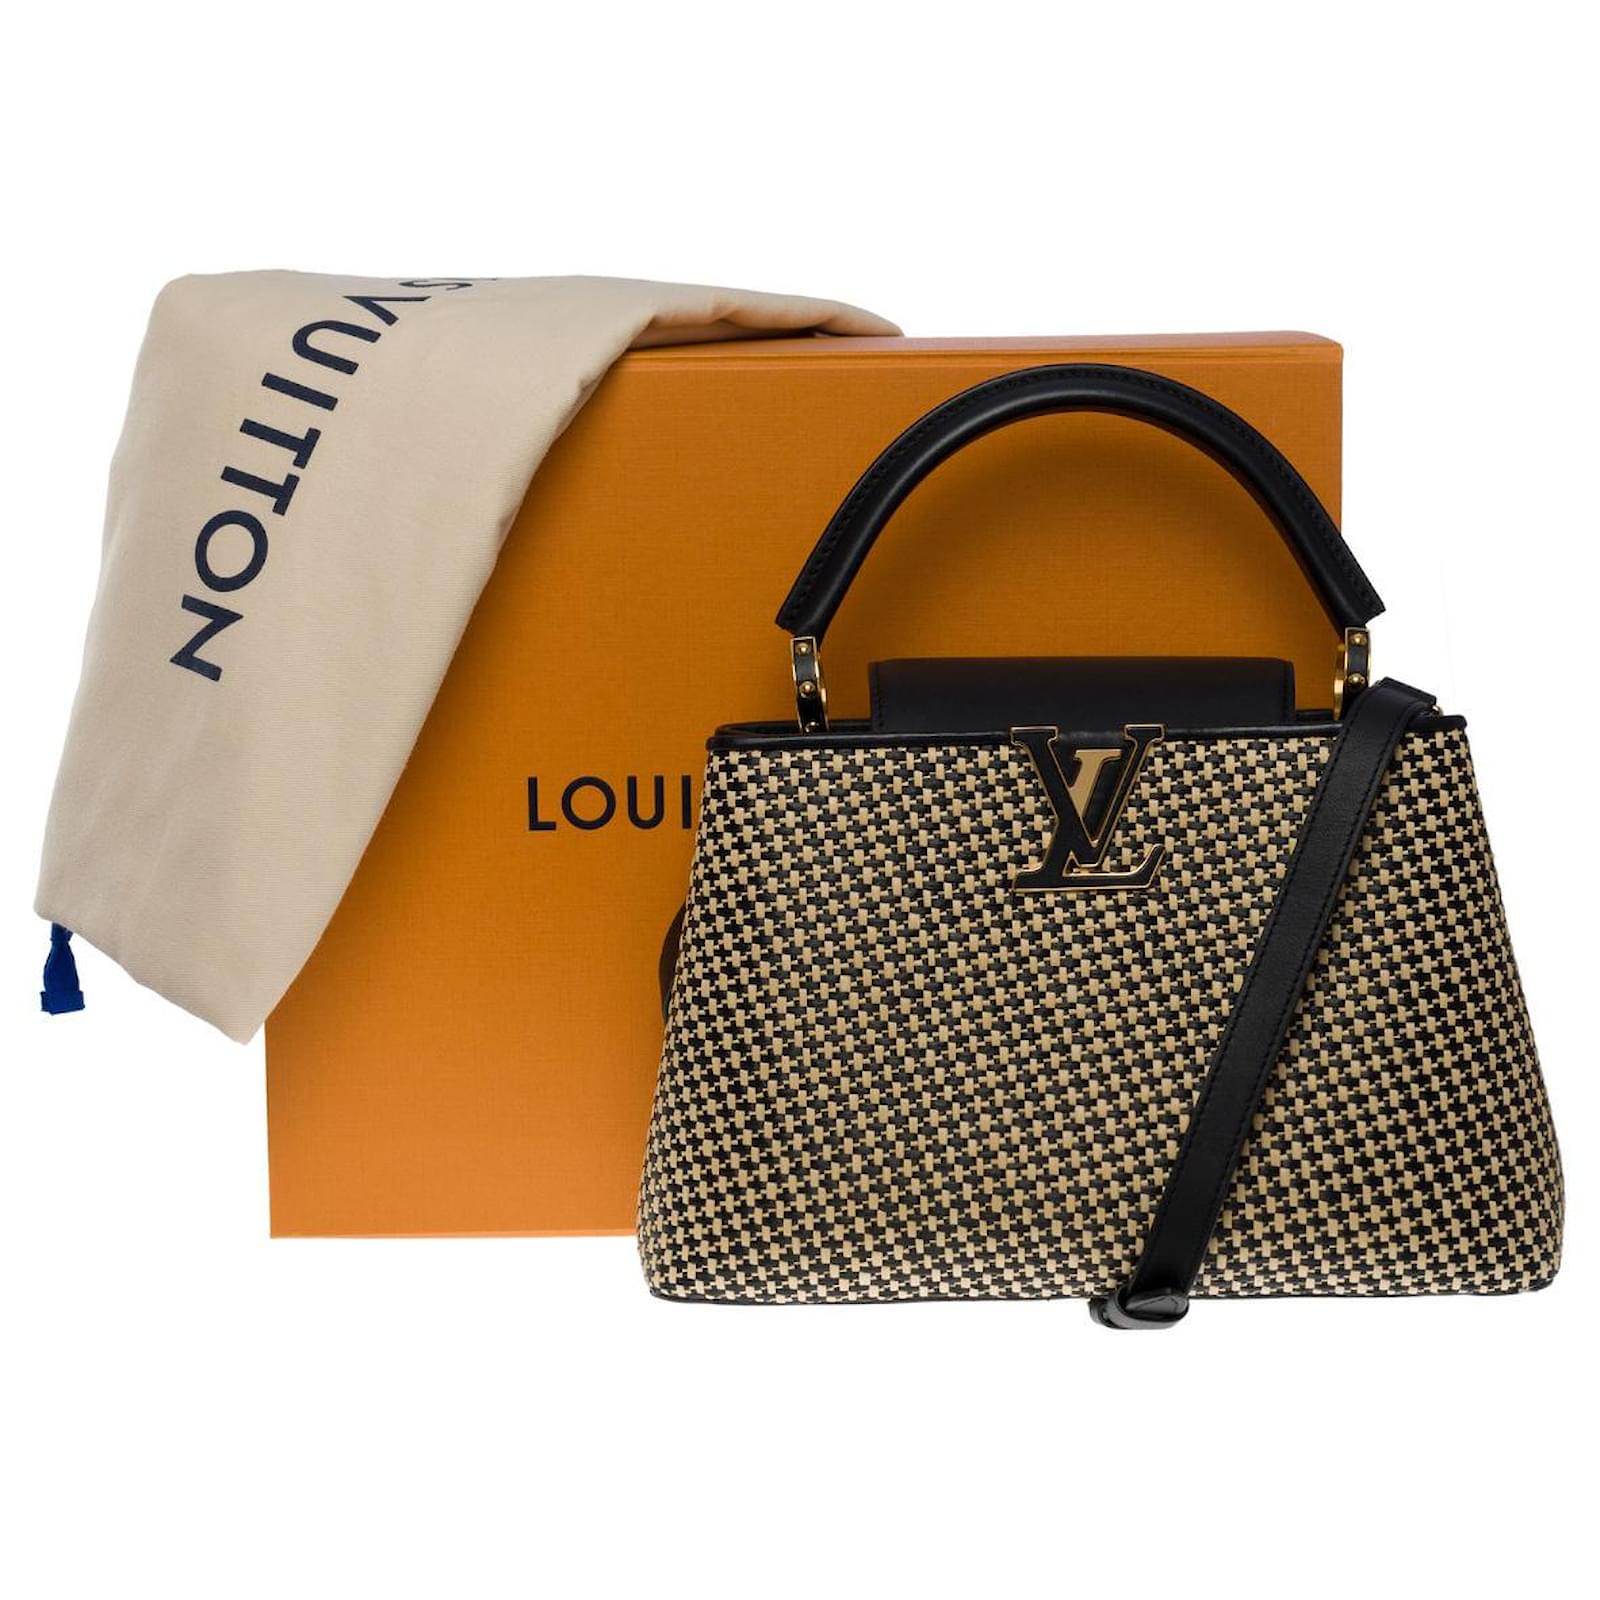 Louis Vuitton capucines mm shoulder bag in beige raffia and black